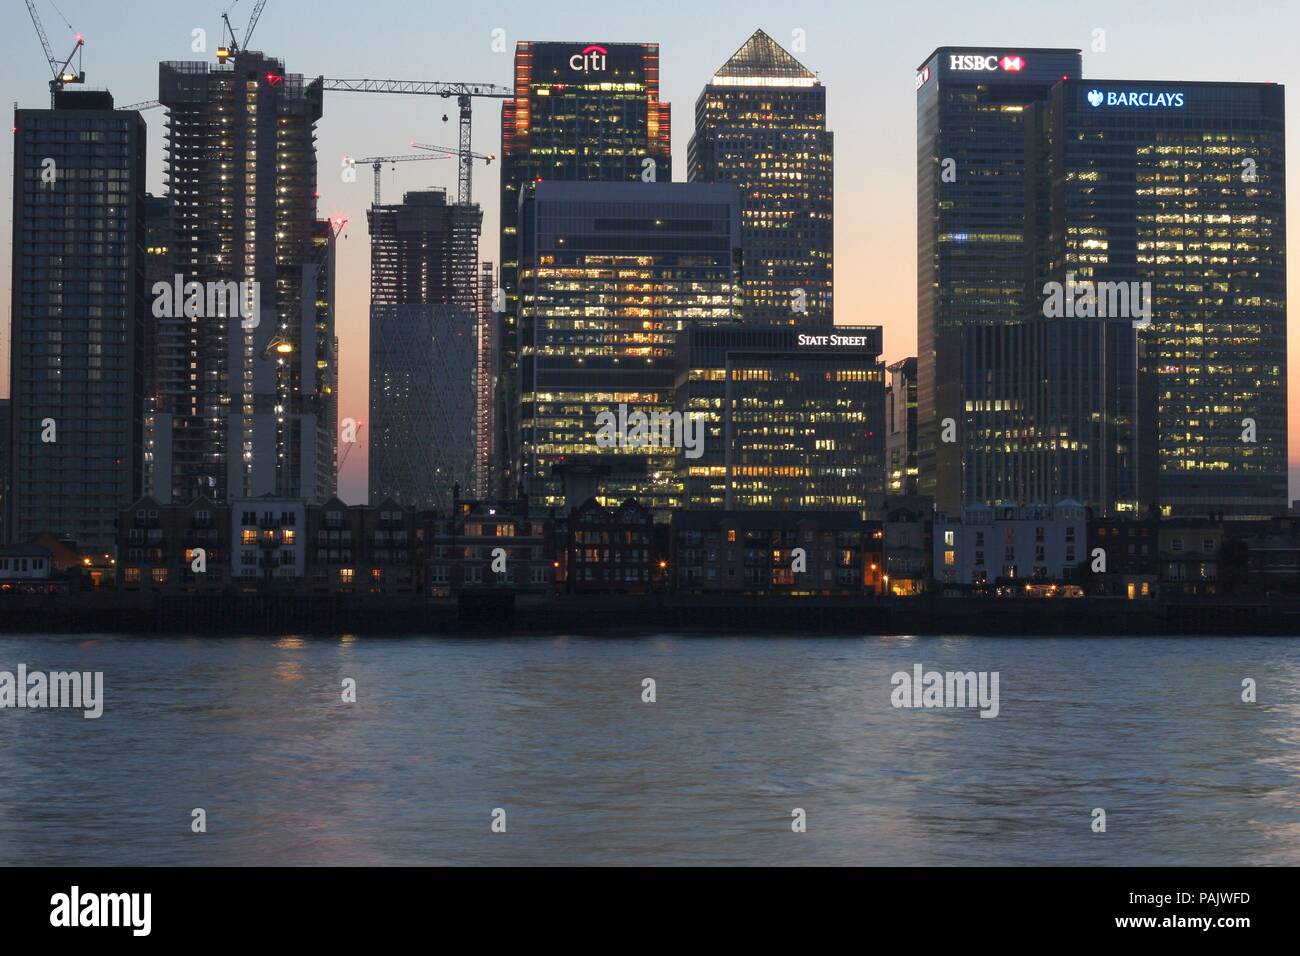 Skyline von Canary Wharf, London Docklands Stockfoto